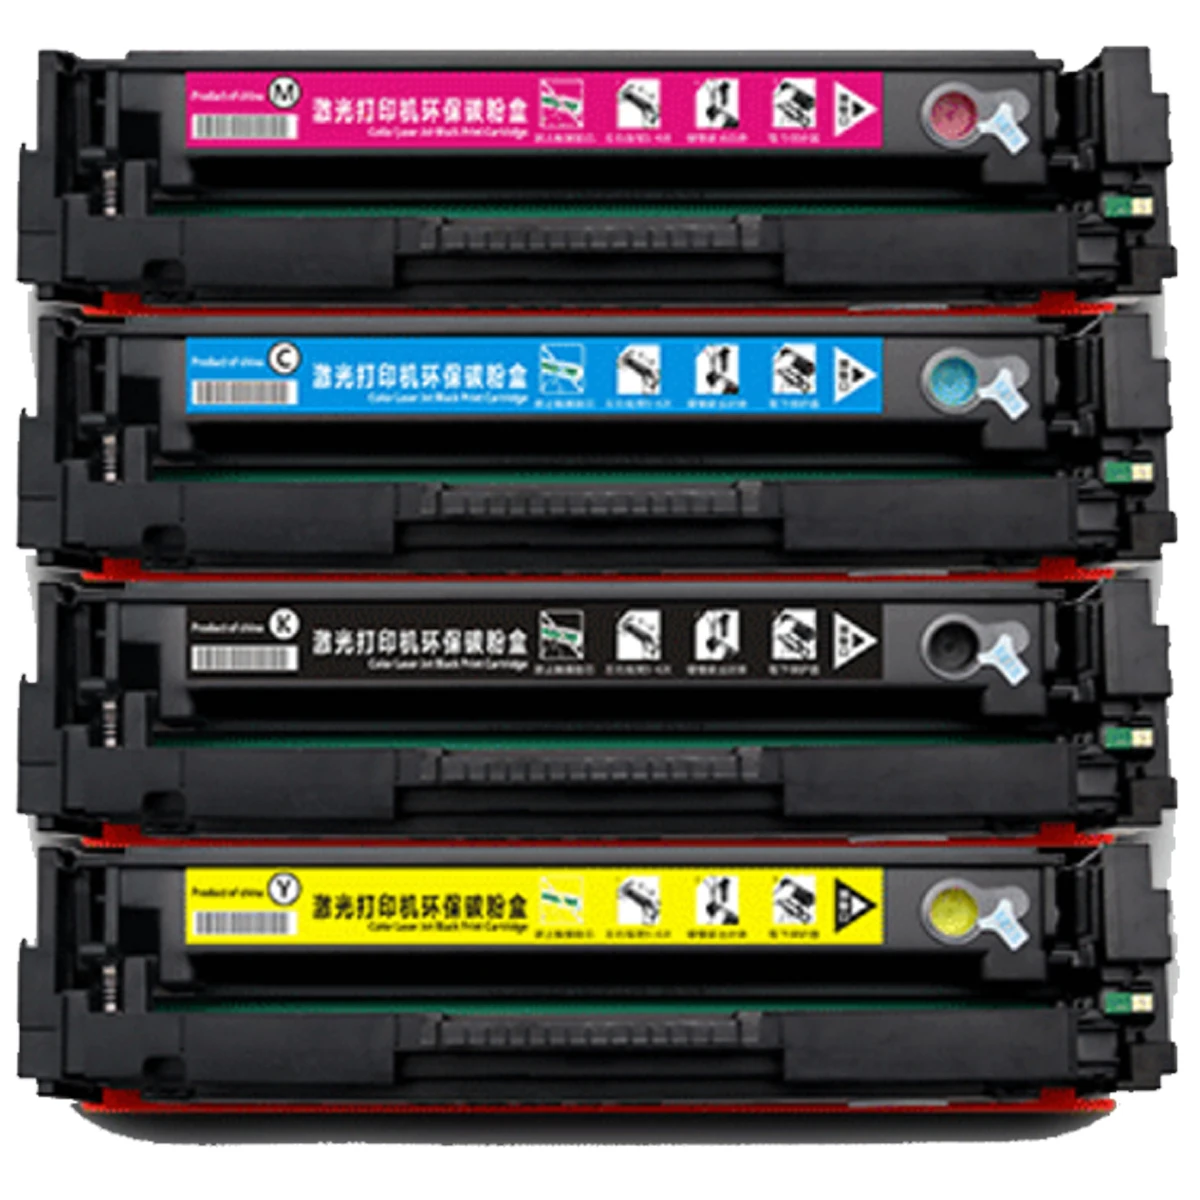 

Color Toner Cartridge for HP Colour/Color LaserJet Pro M252dw M252n MFP M277dw M277n M252 M277 M-252 M-277 M 252 M 277n mfp dw